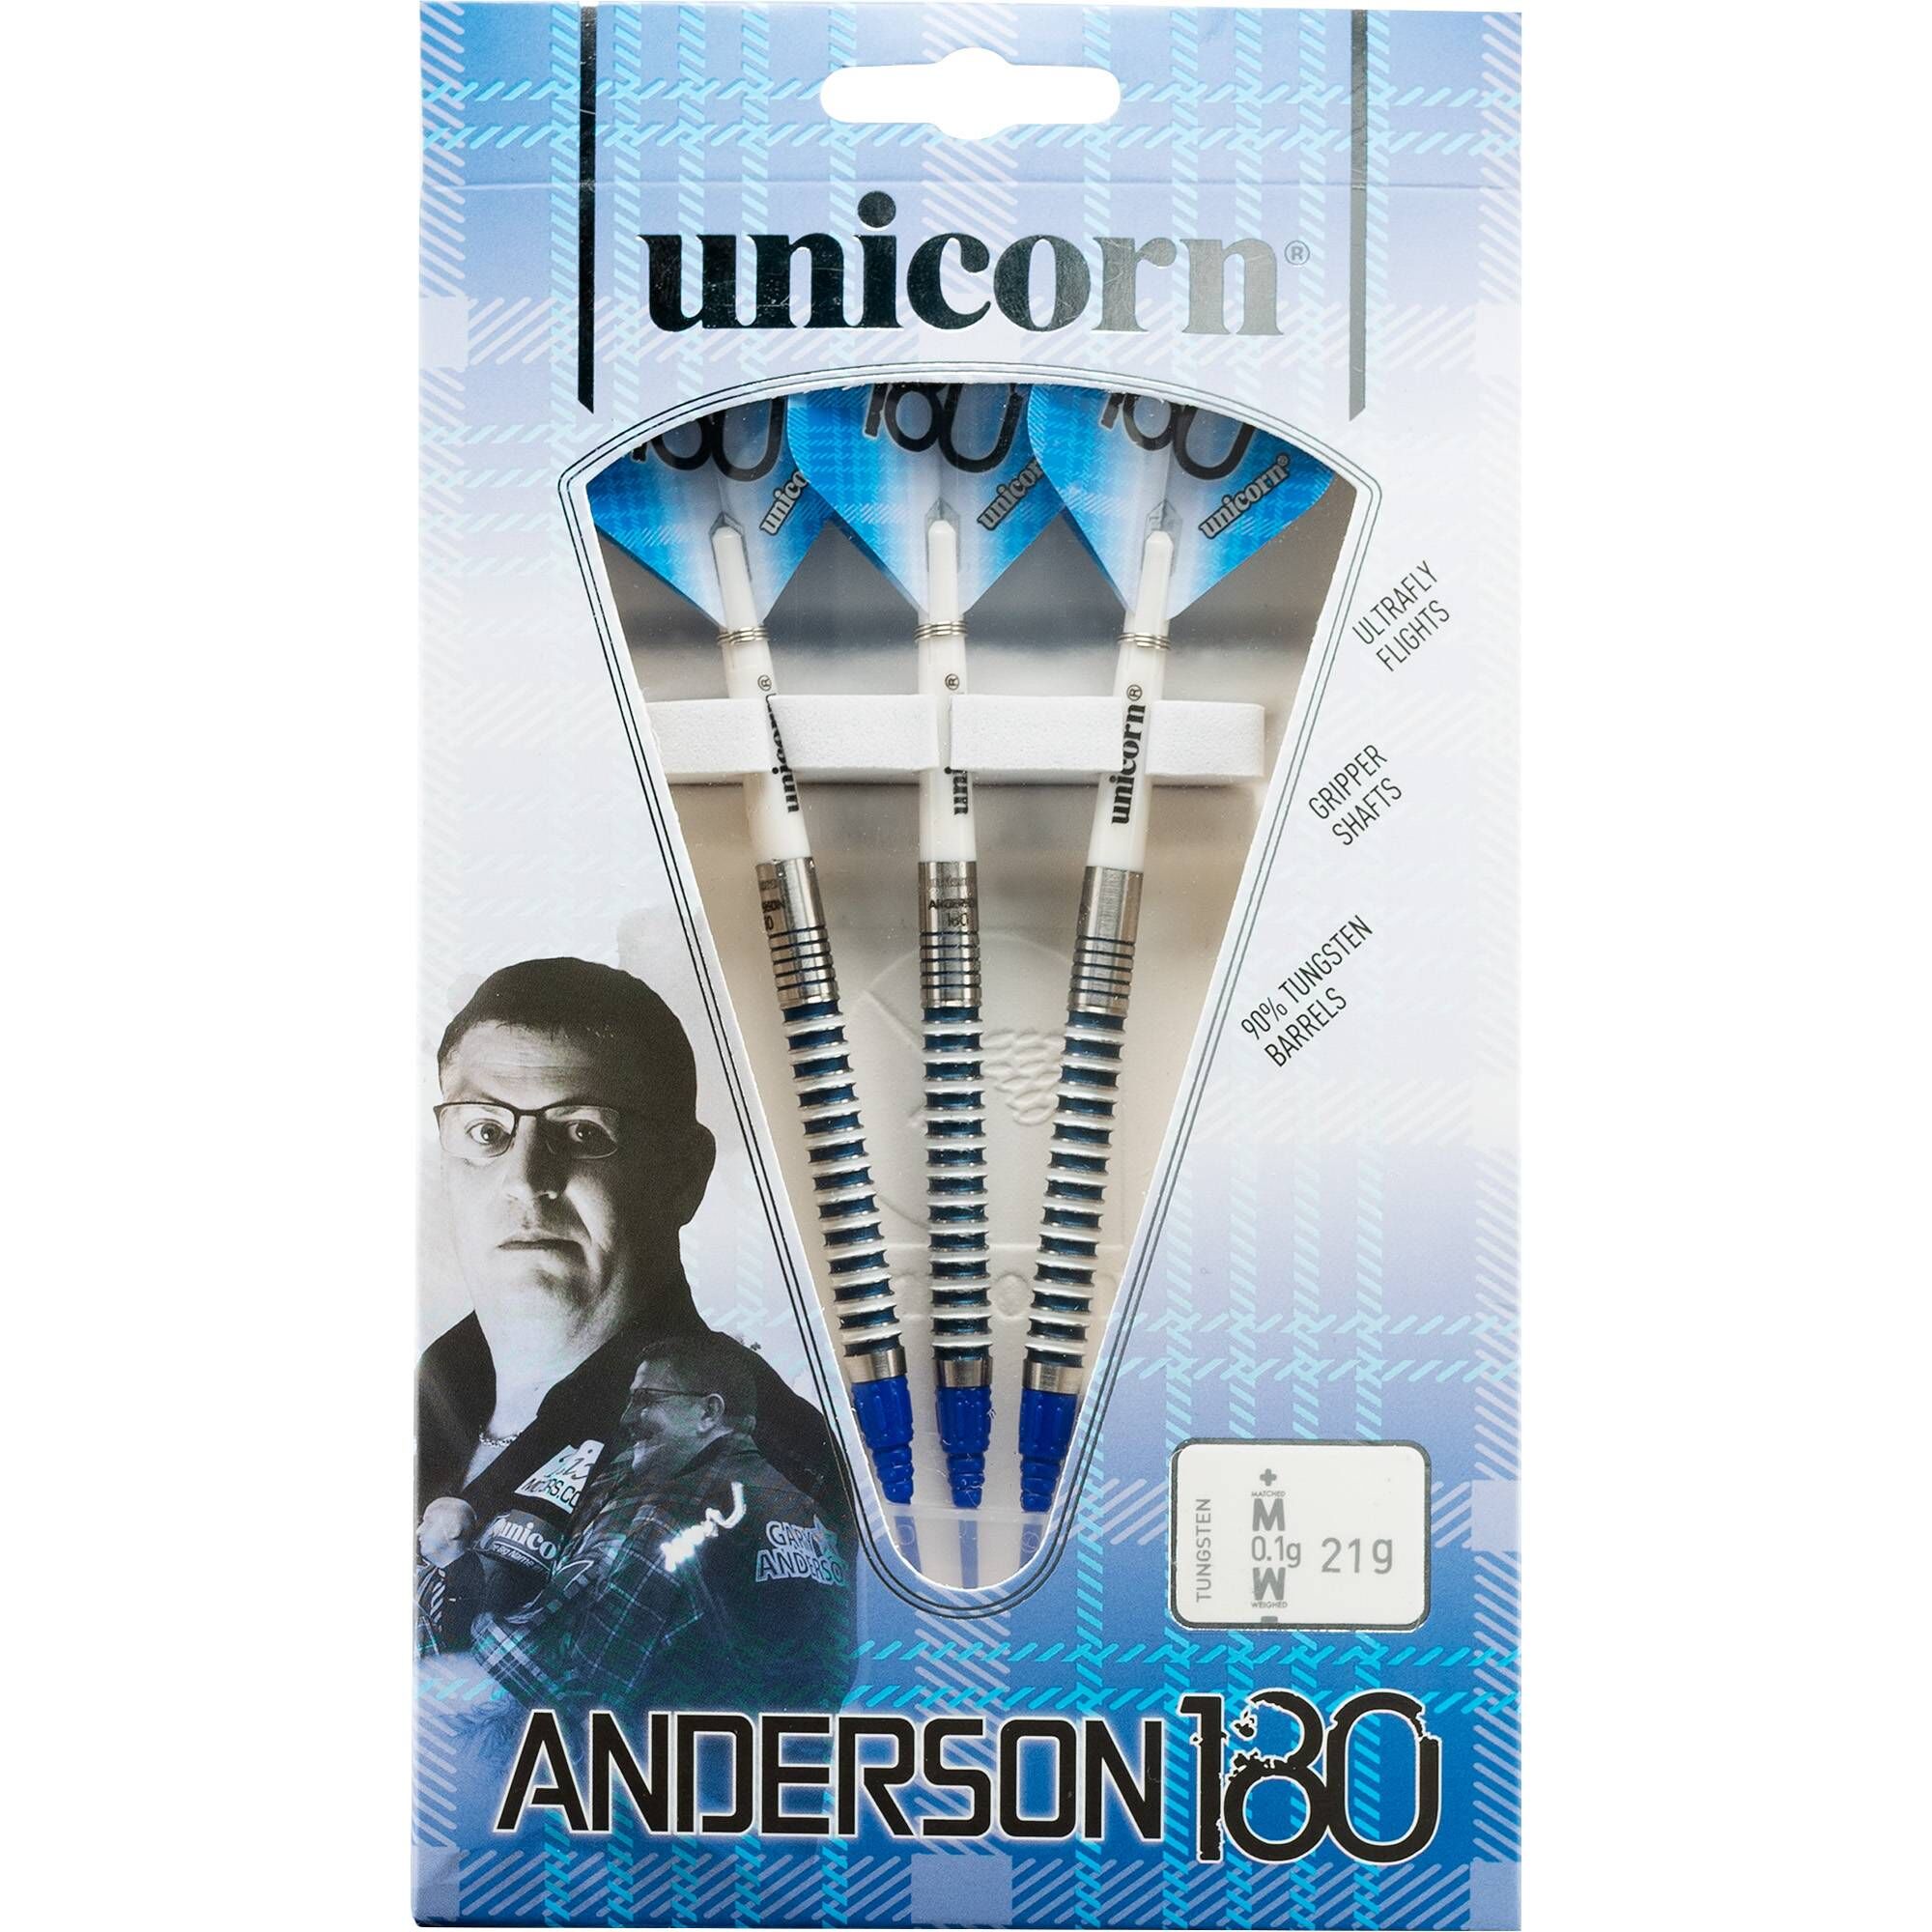 Unicorn - Gary Anderson 180 - Softdart